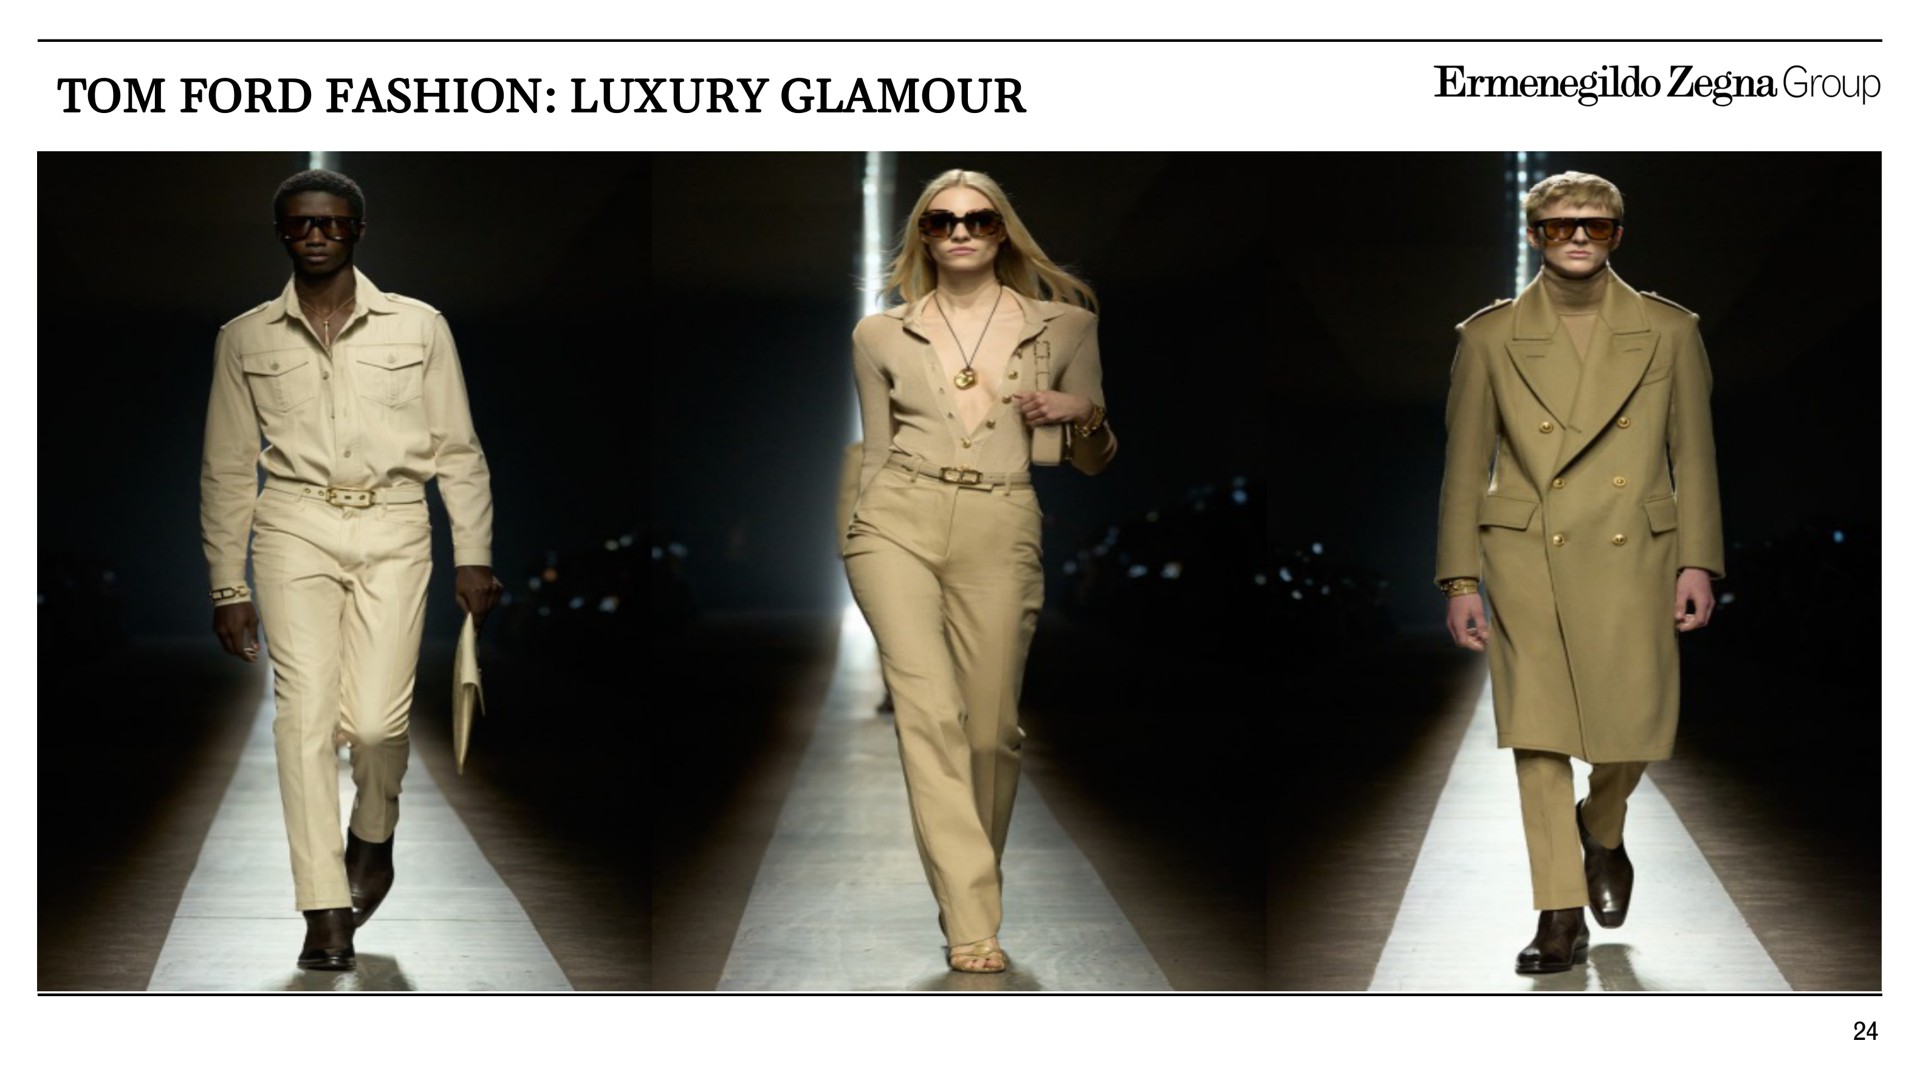 ford fashion luxury glamour group | Zegna